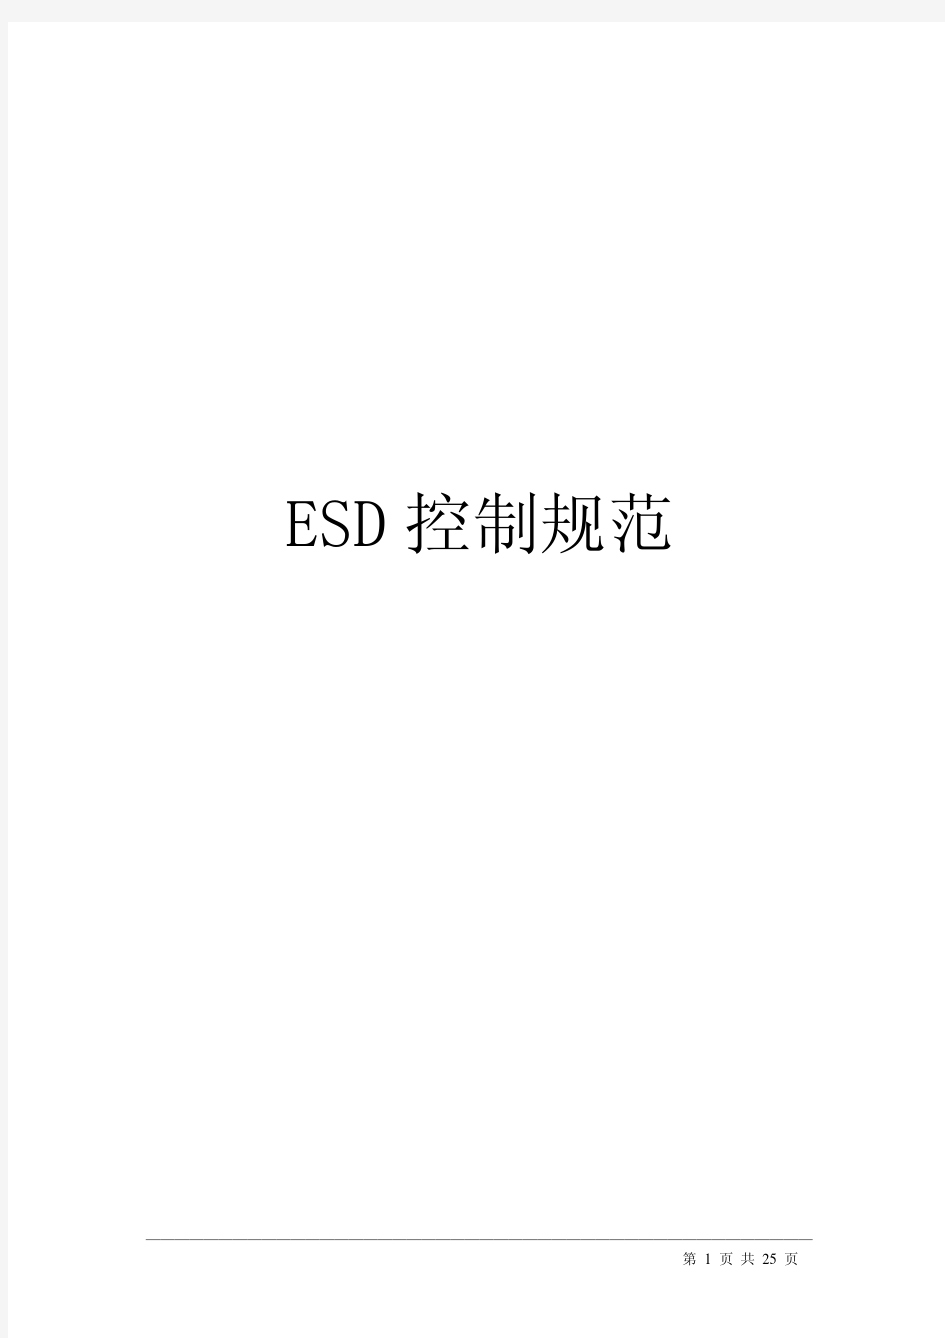 ESD控制规范标准